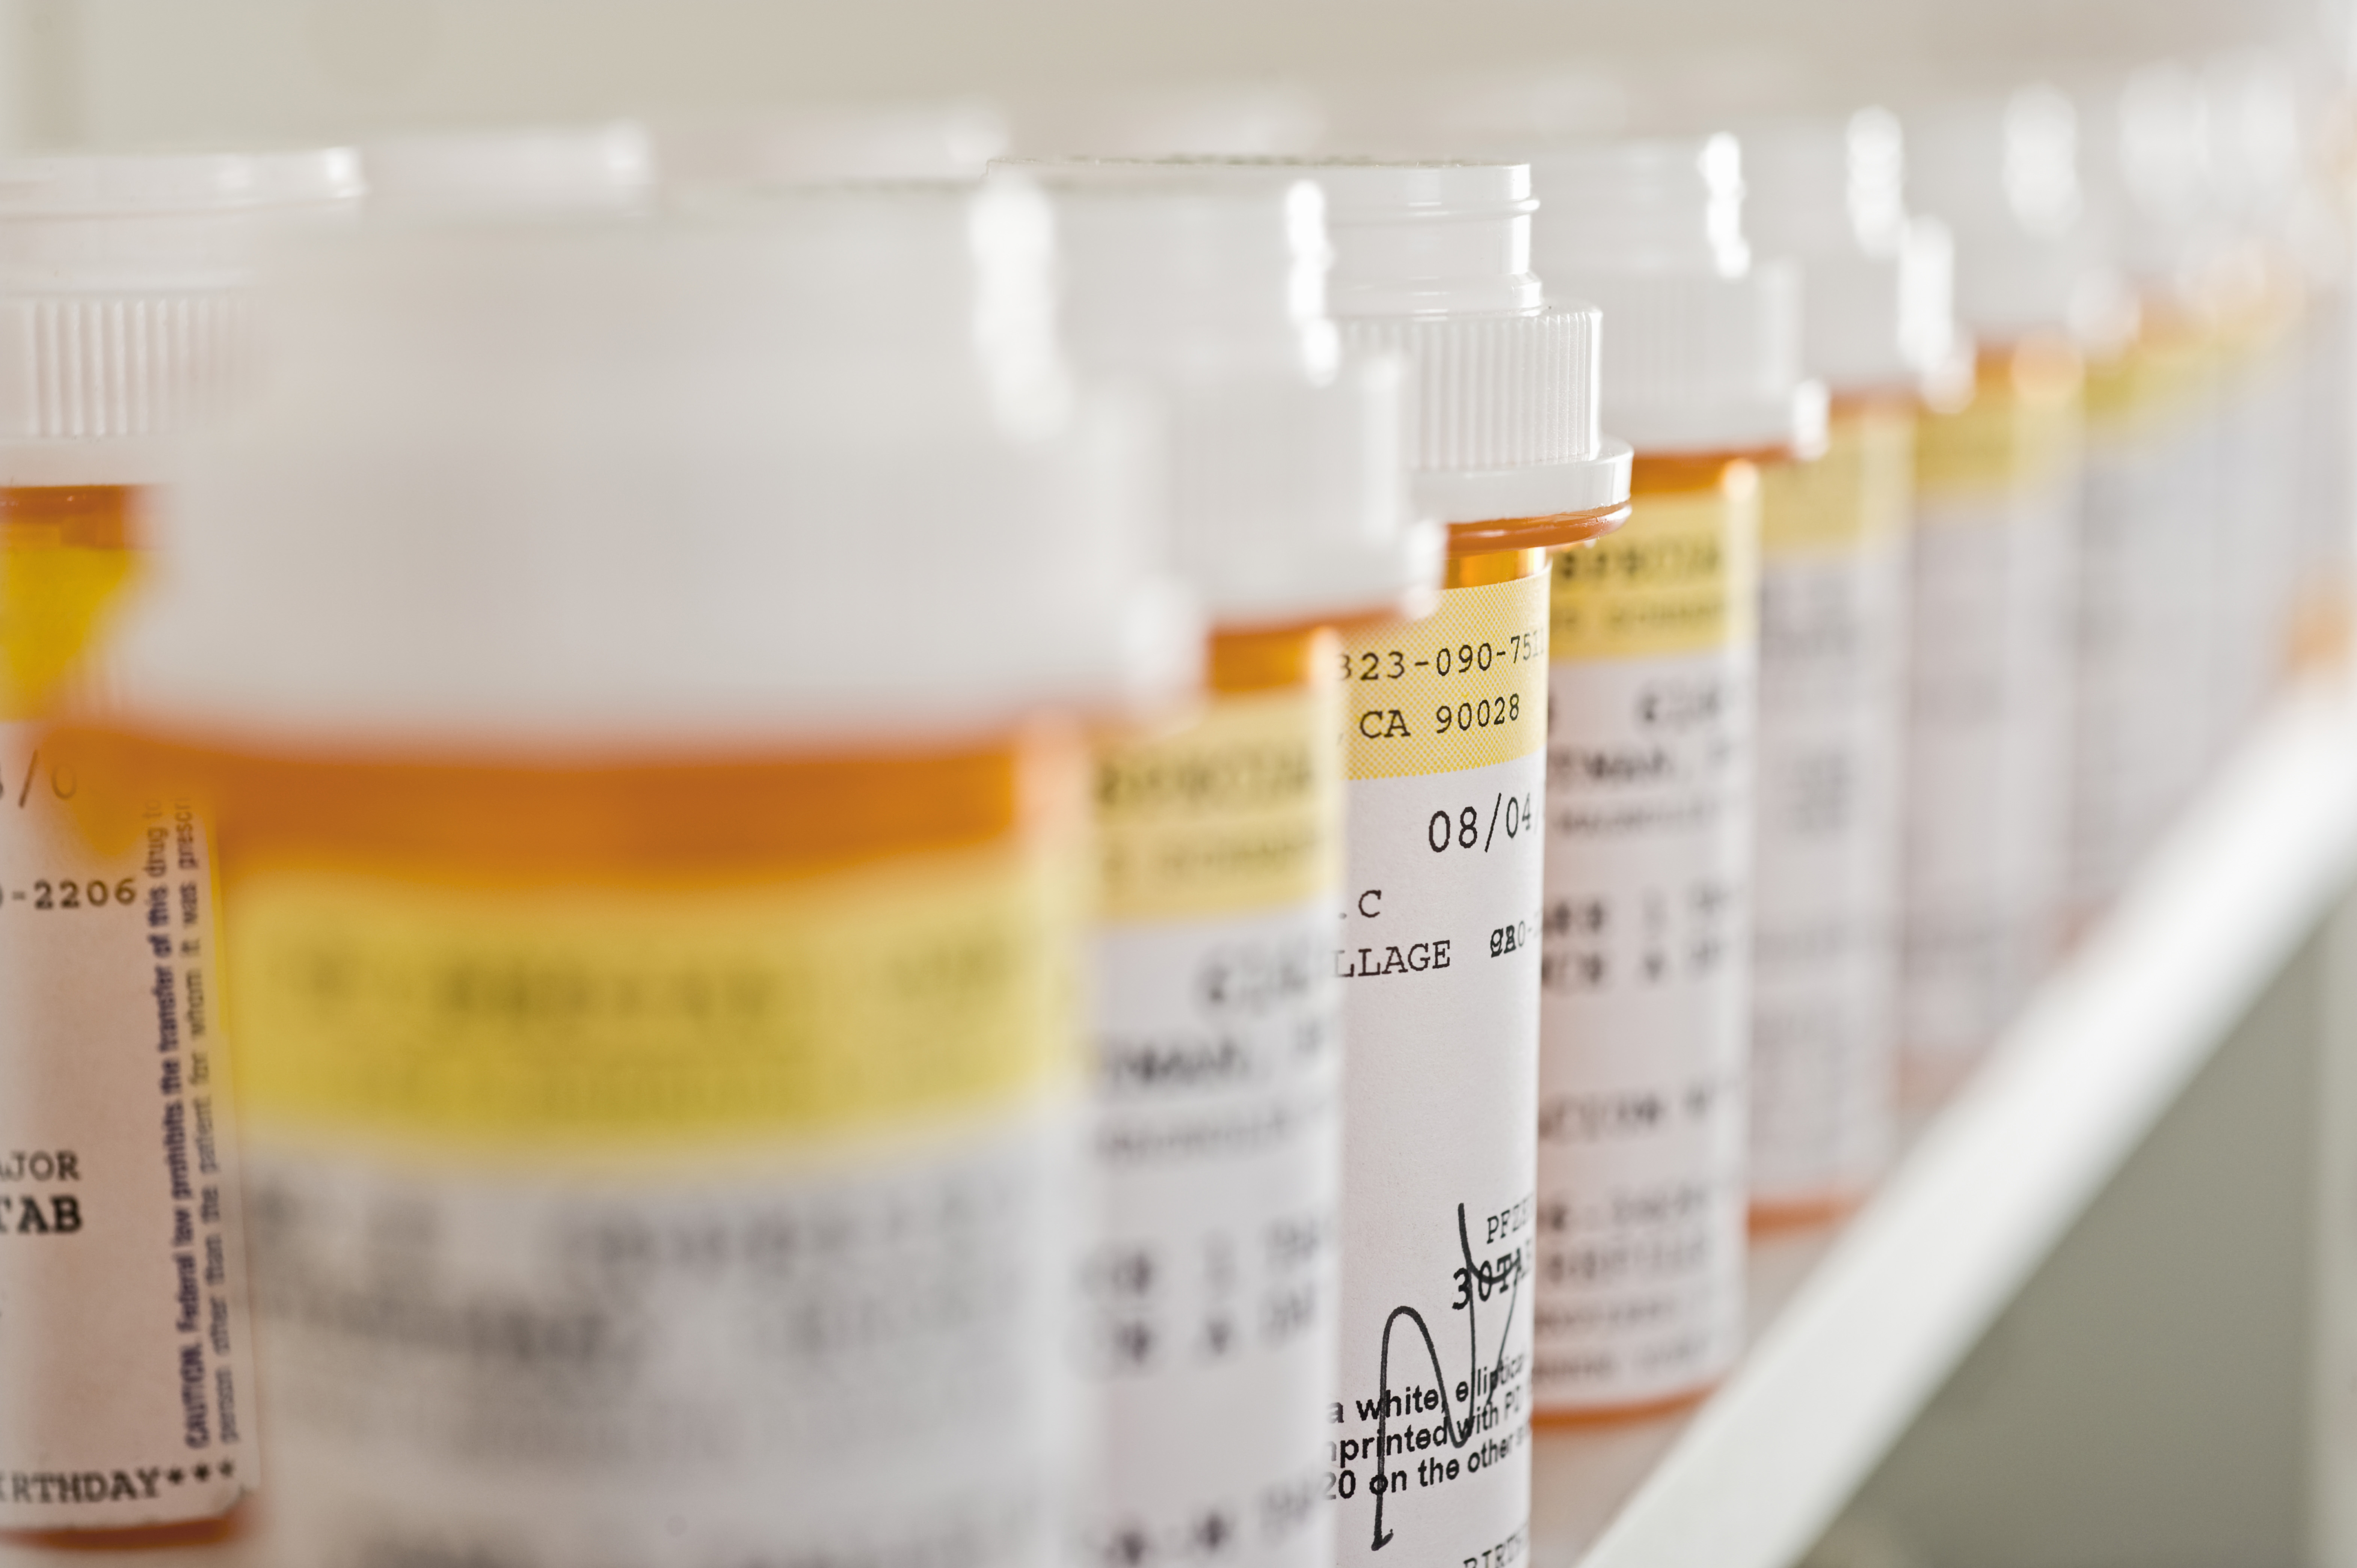 Pill bottles are arranged on a shelf. Shutterstock image via sirtravelsalot